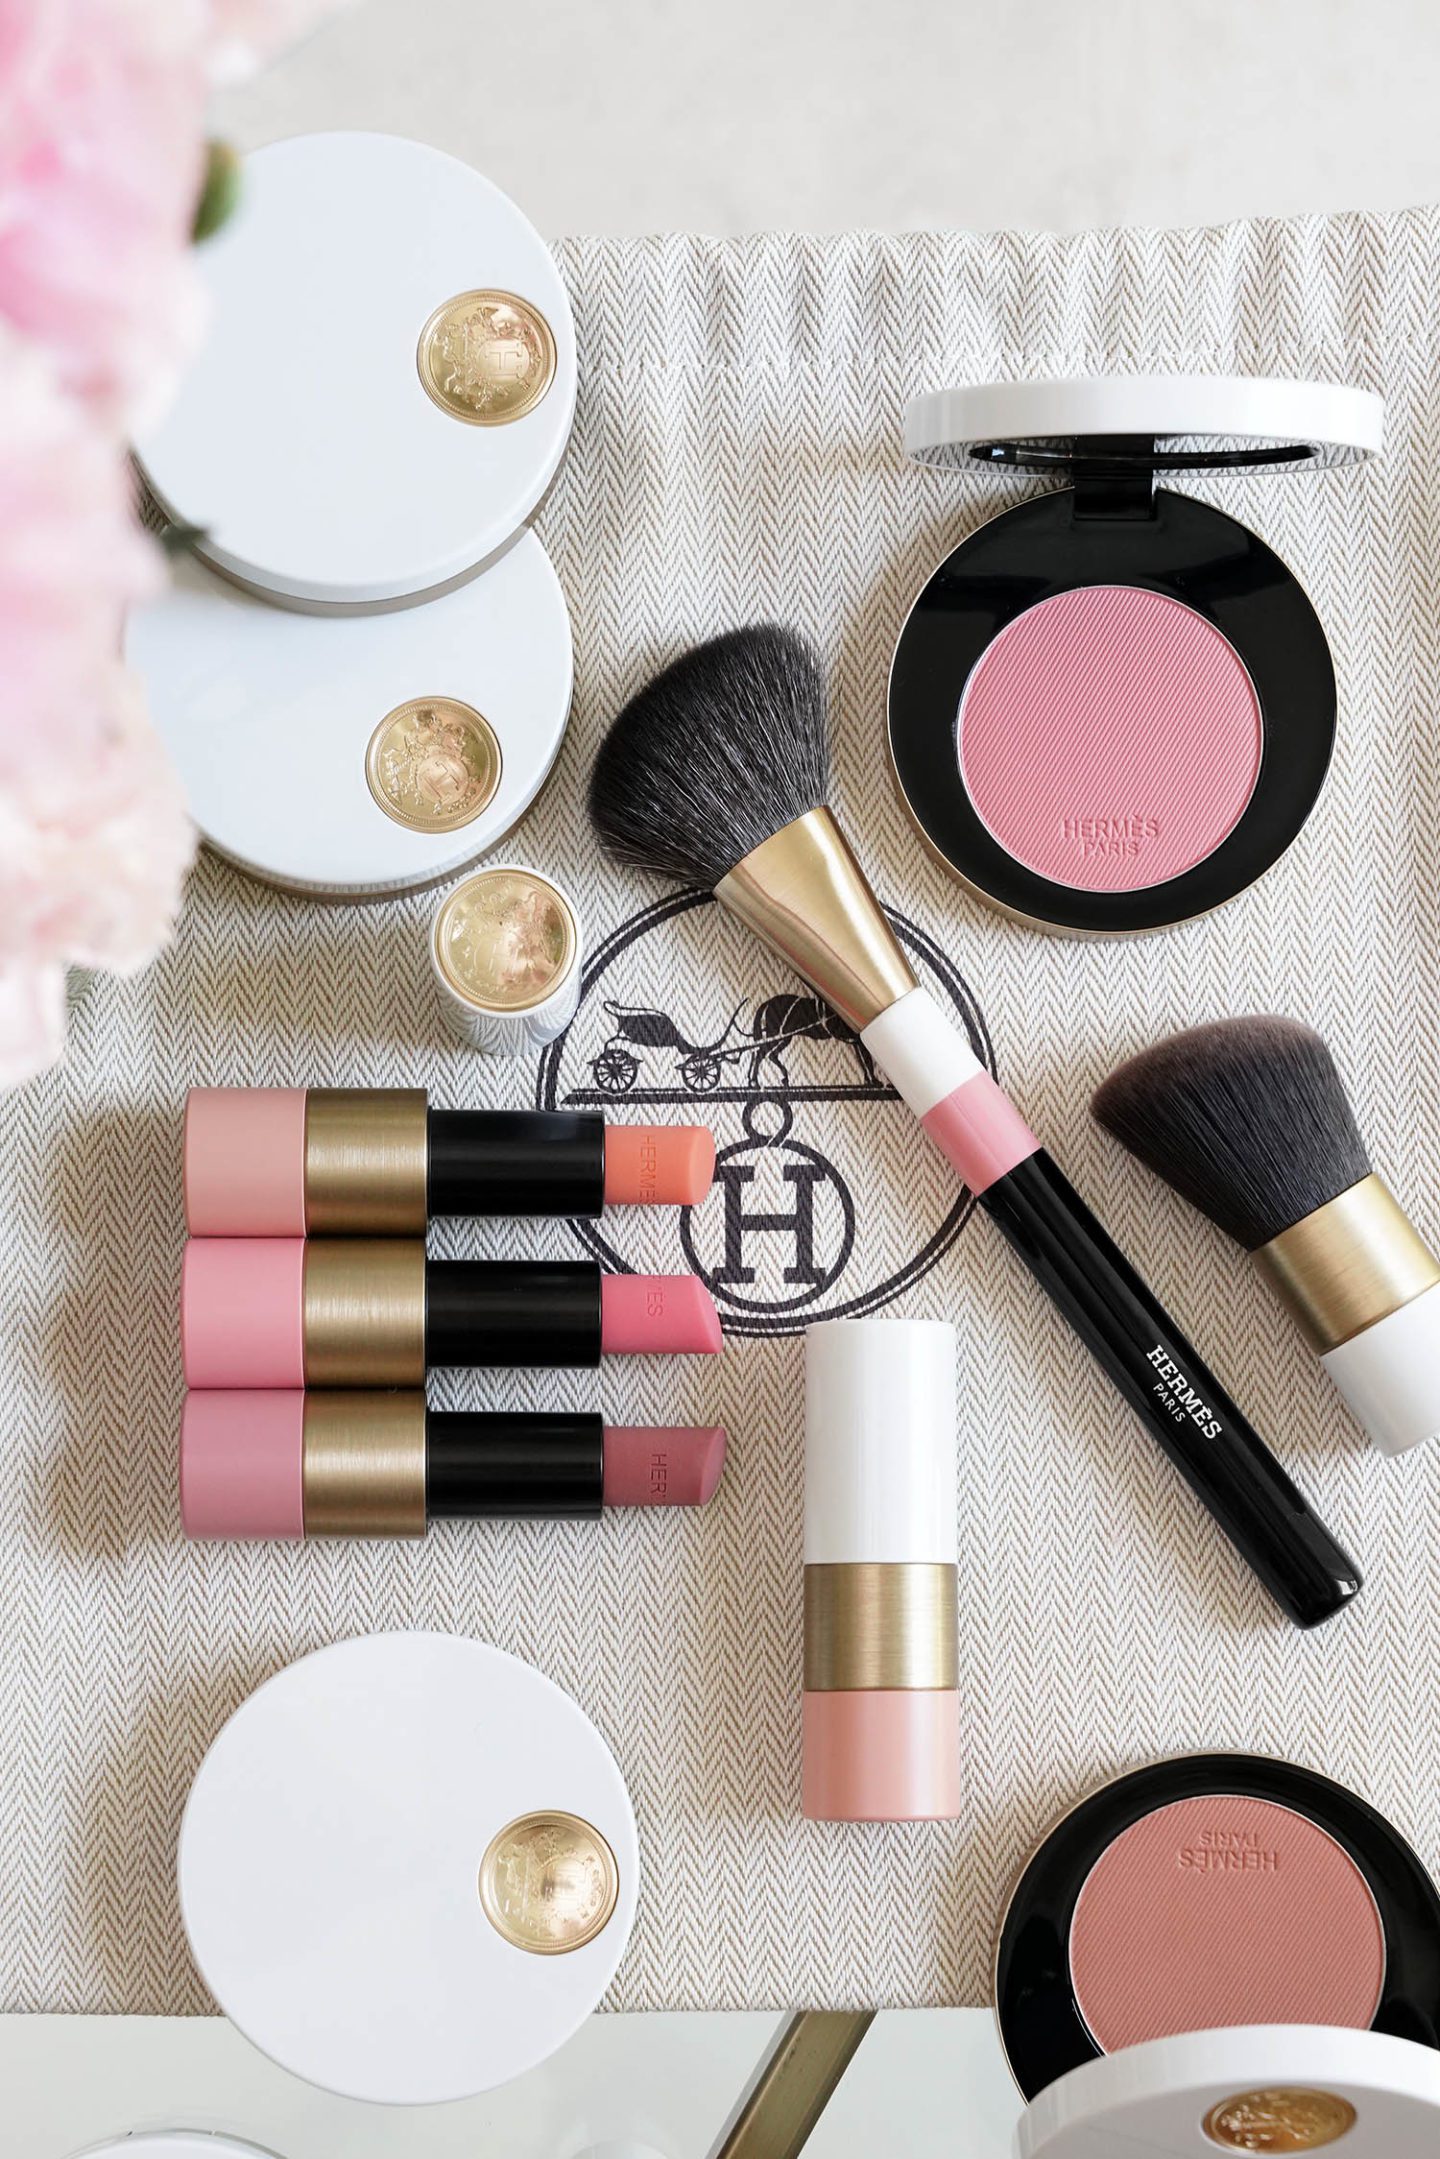 Rose Hermes Silky Blush Powder + Rosy Lip Enhancer Review